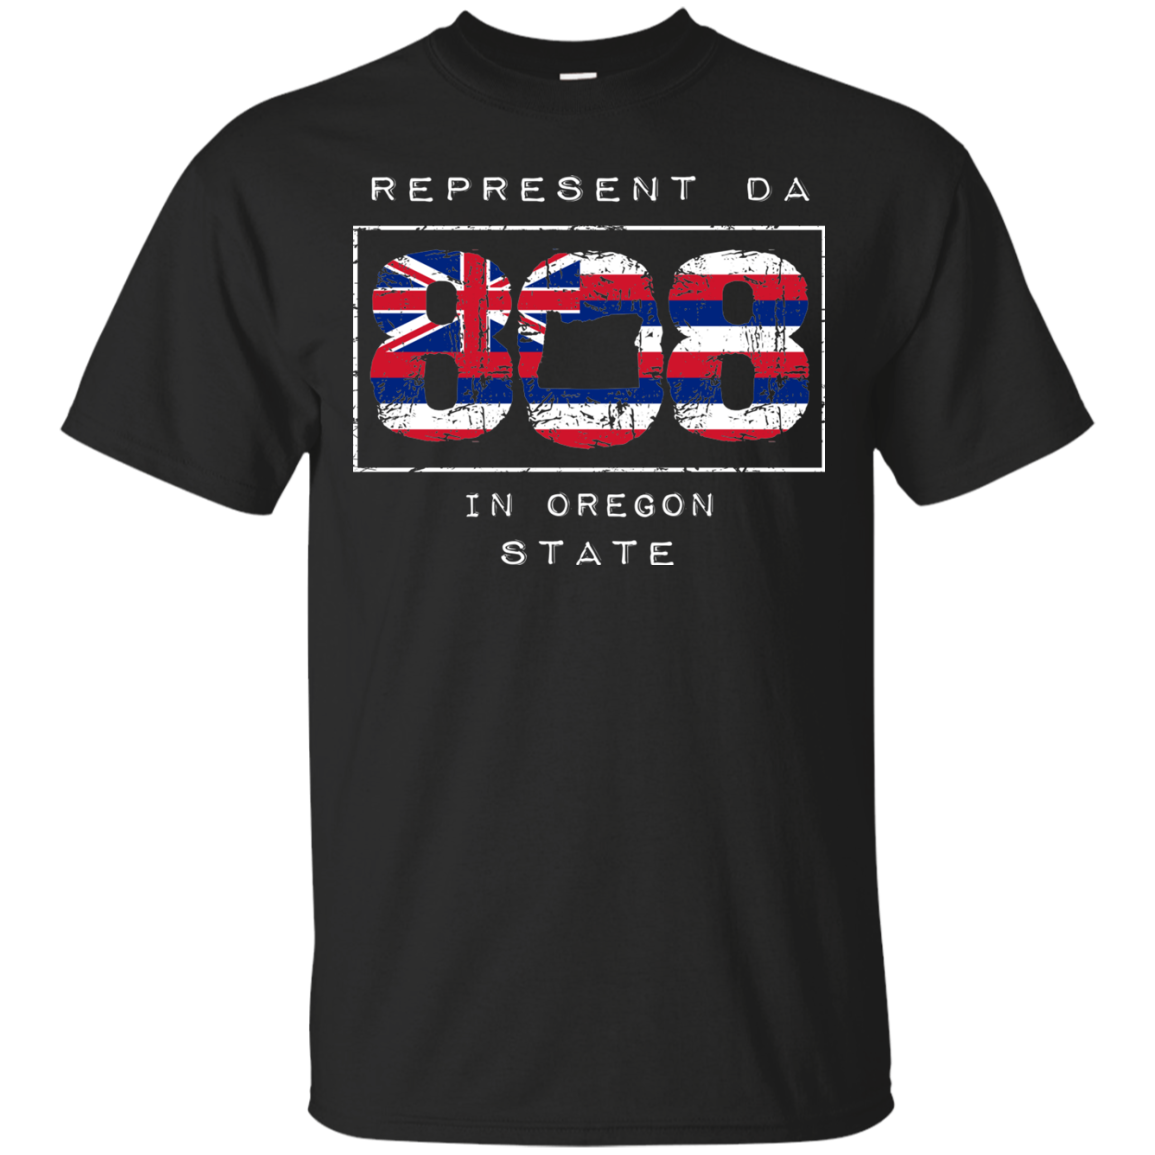 Rep Da 808 In Oregon State Ultra Cotton T-Shirt, T-Shirts, Hawaii Nei All Day